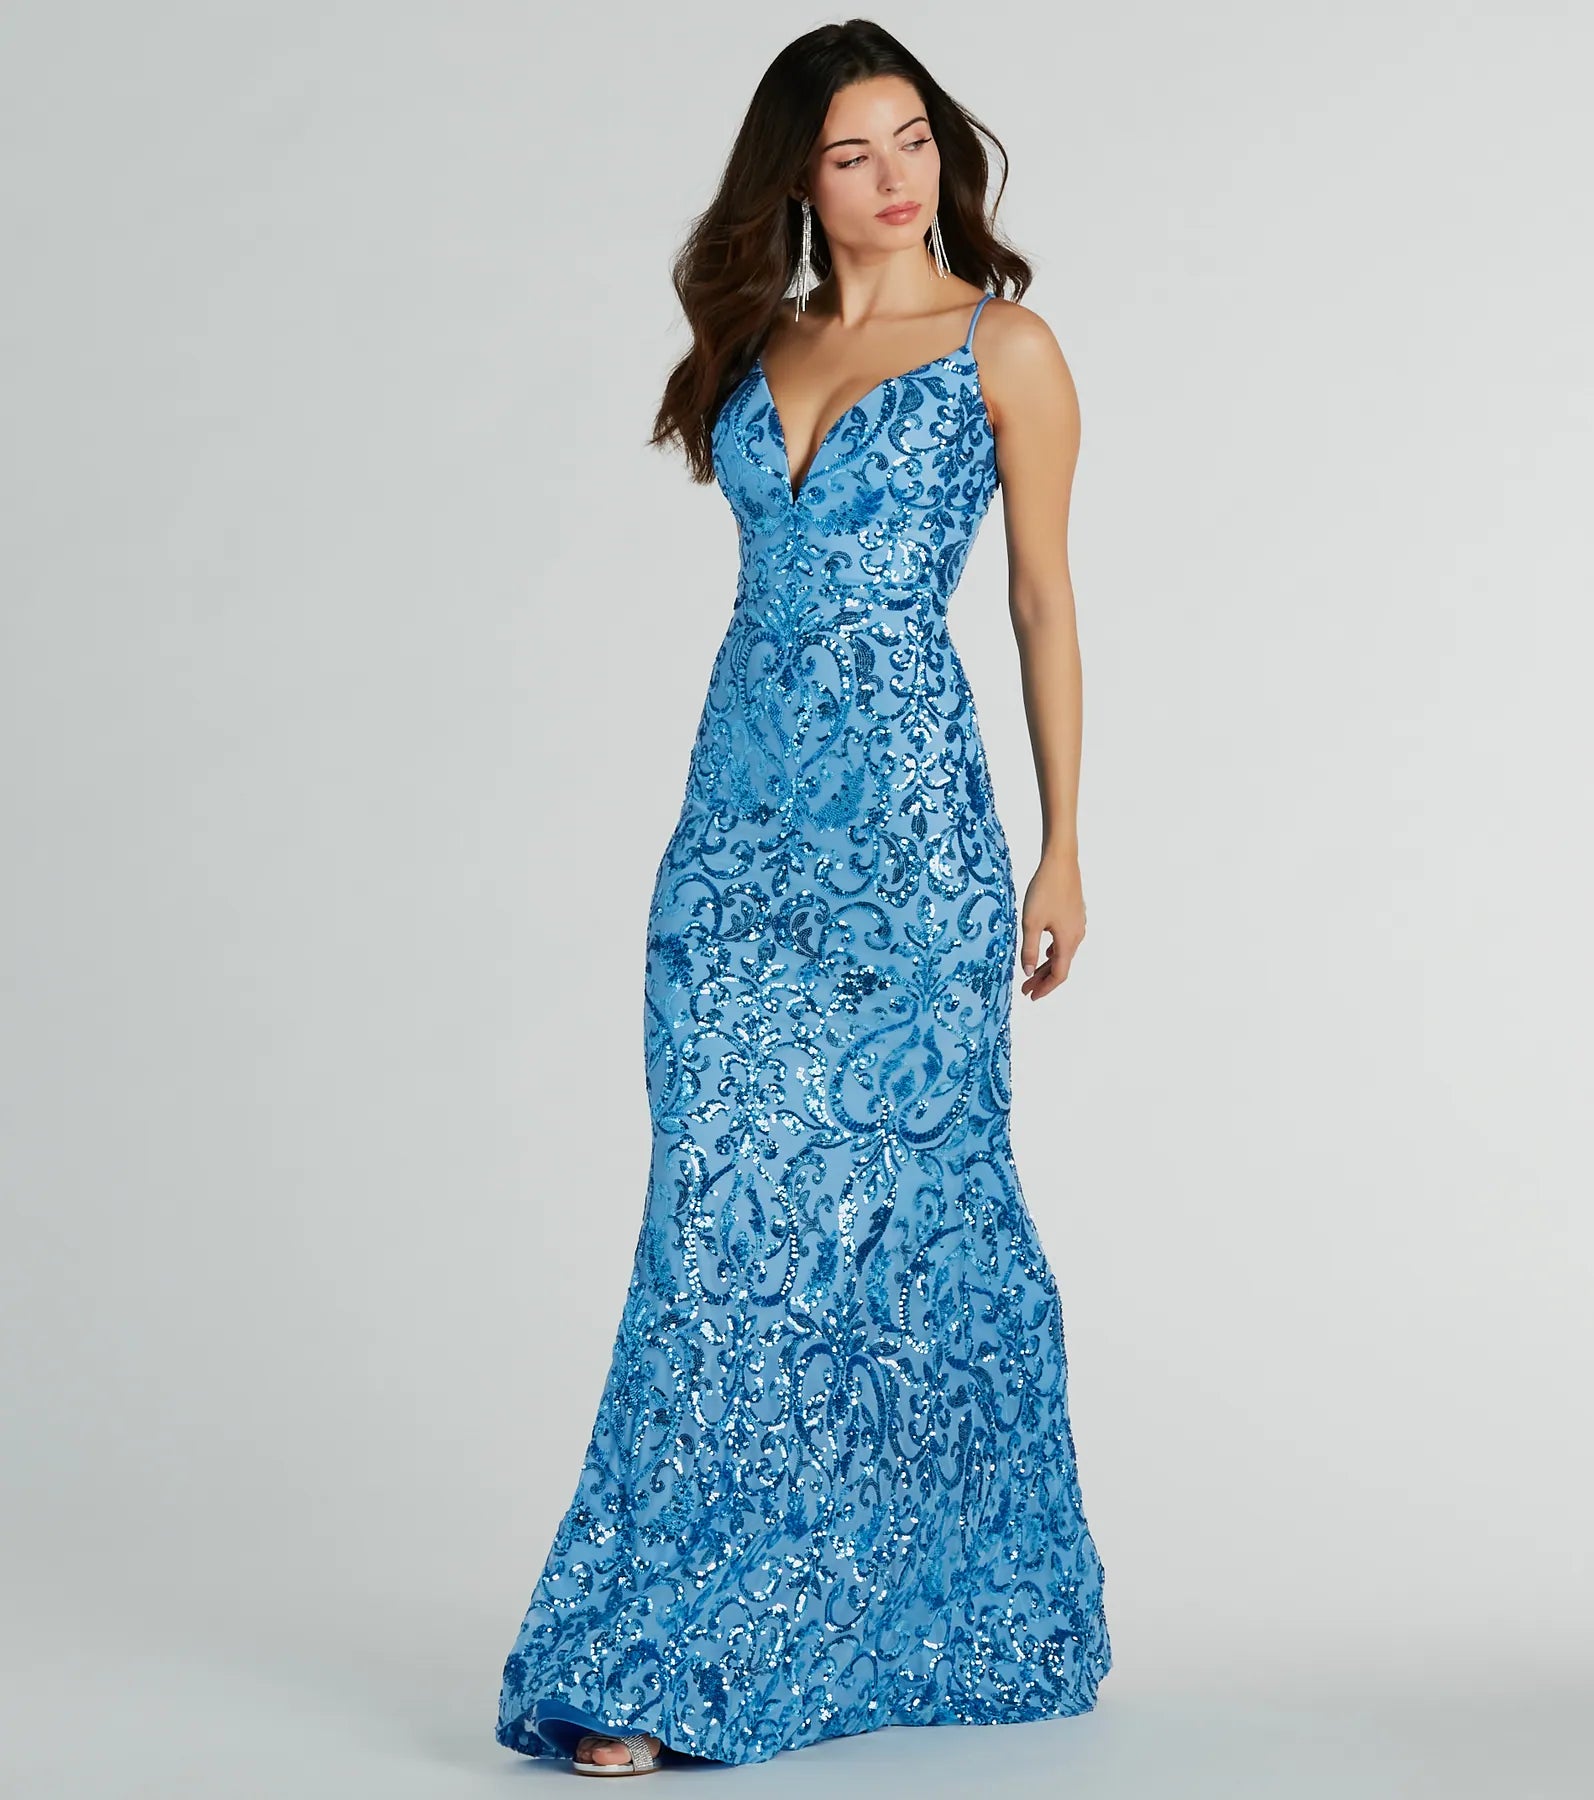 V-neck General Print Stretchy Sequined Mesh Sleeveless Spaghetti Strap Floor Length Knit Mermaid Prom Dress